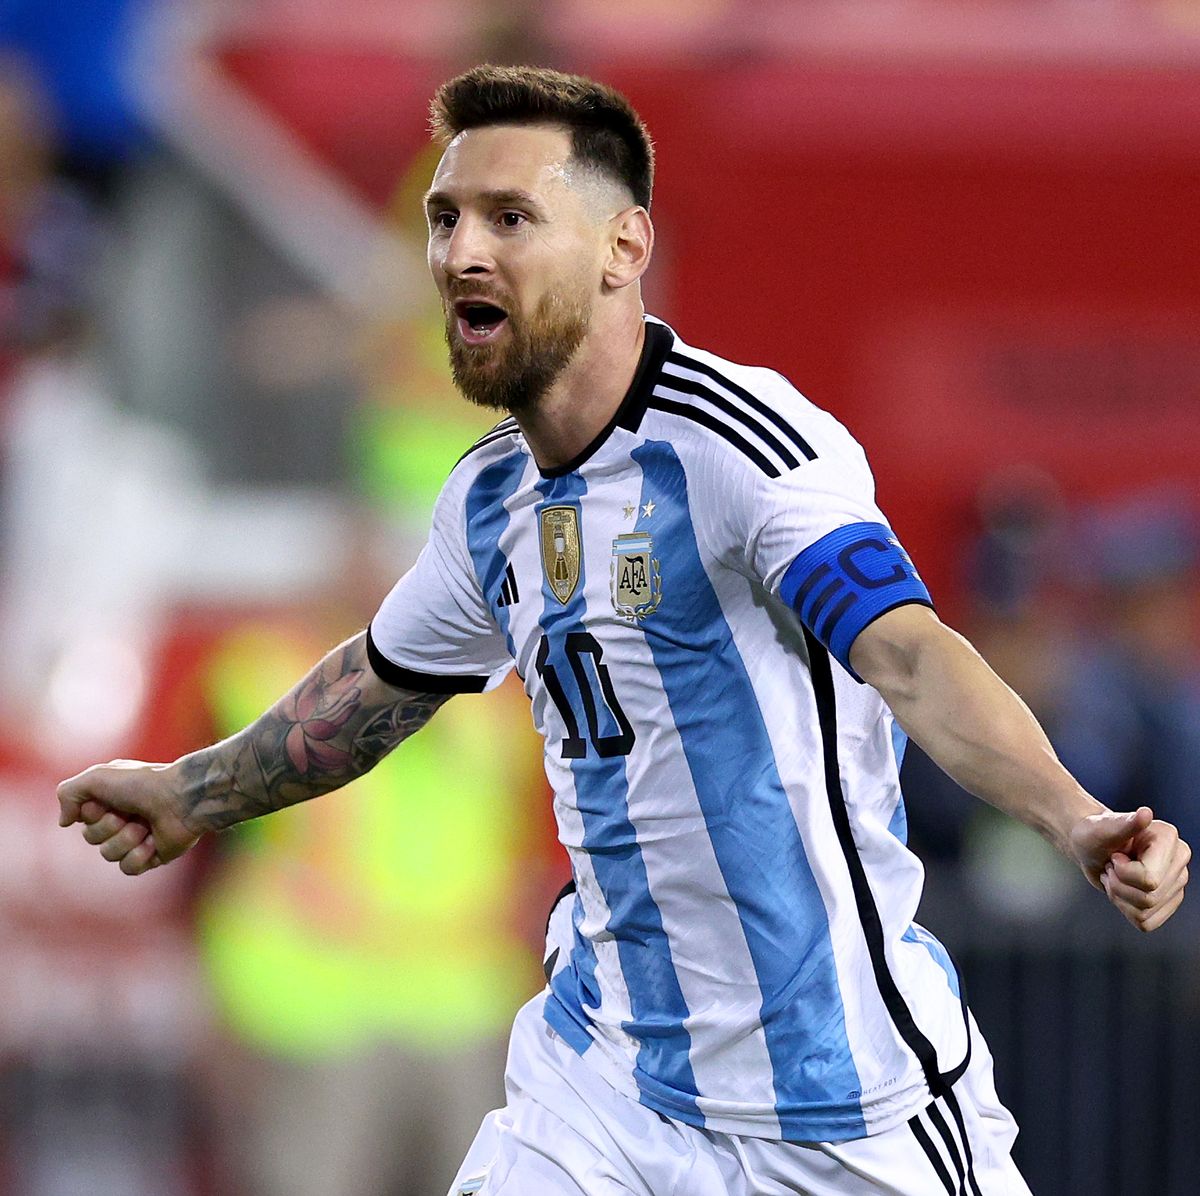 Leo Messi left the field . He - Leo Messi - The Legend